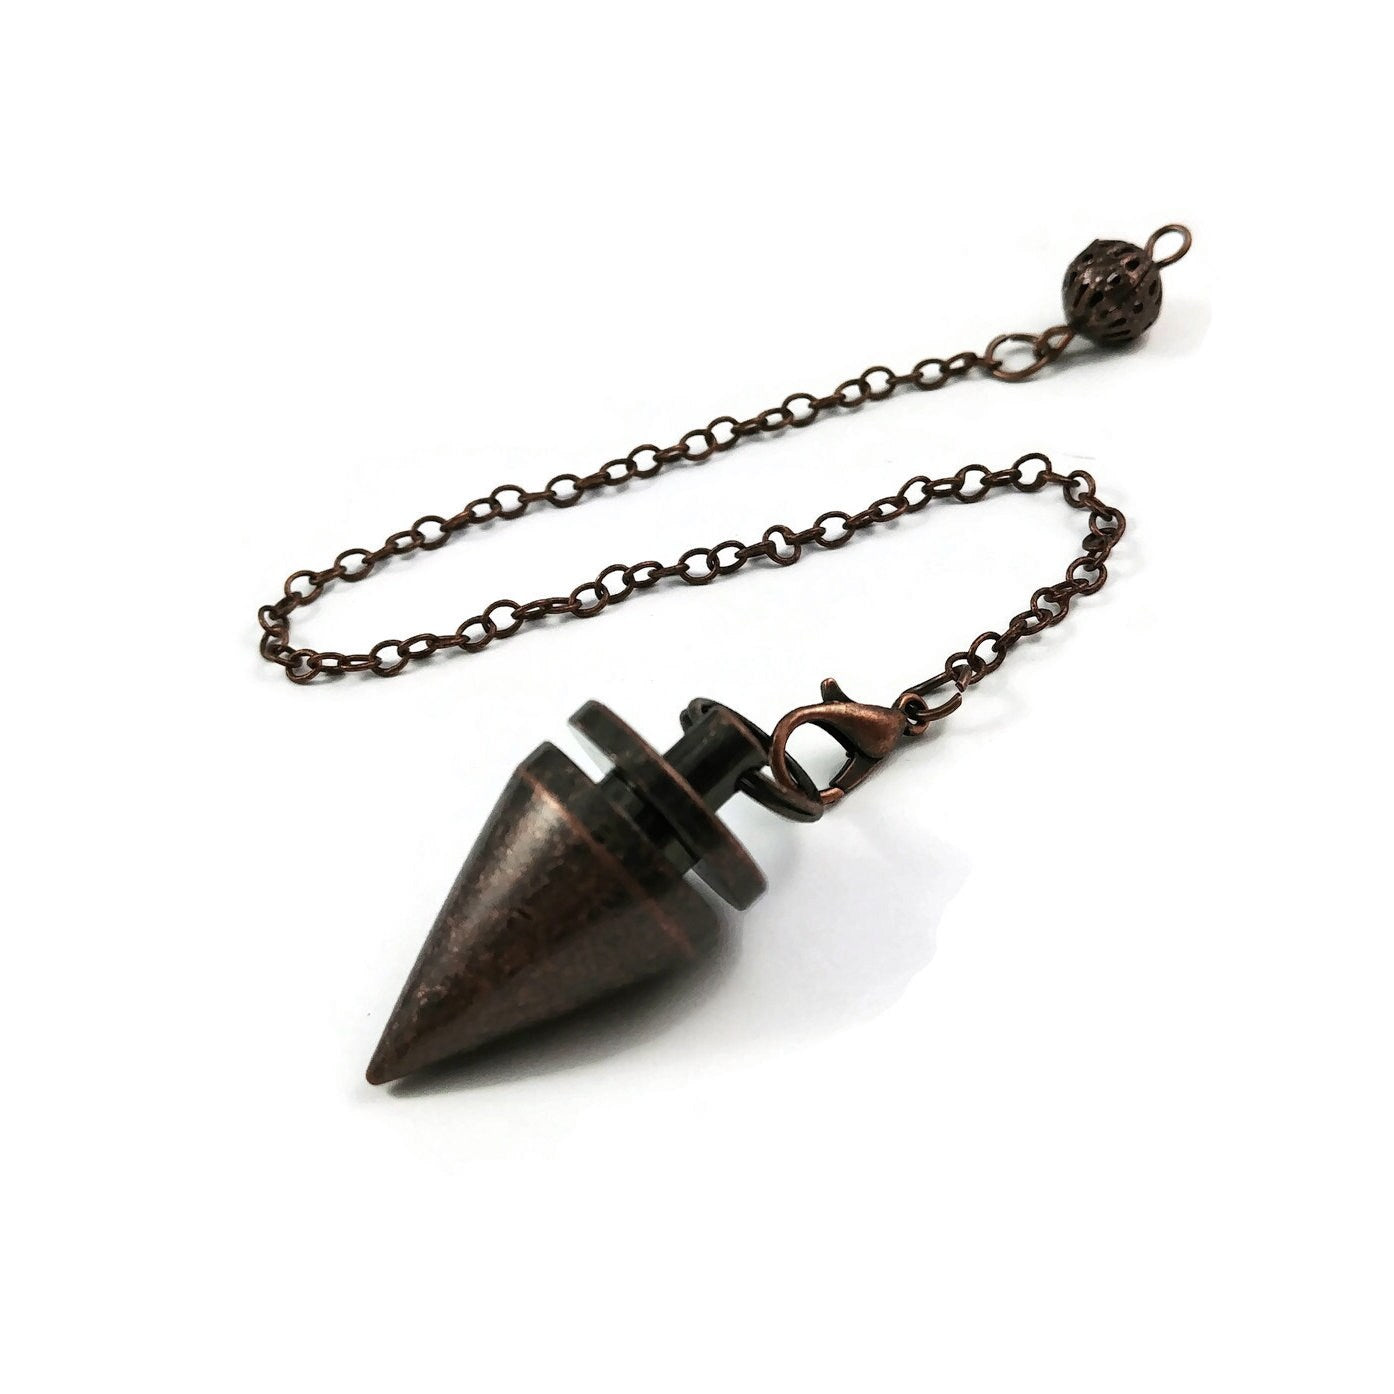 Metal dowsing pointed pendulum - Silver, gold, rose gold or antique bronze